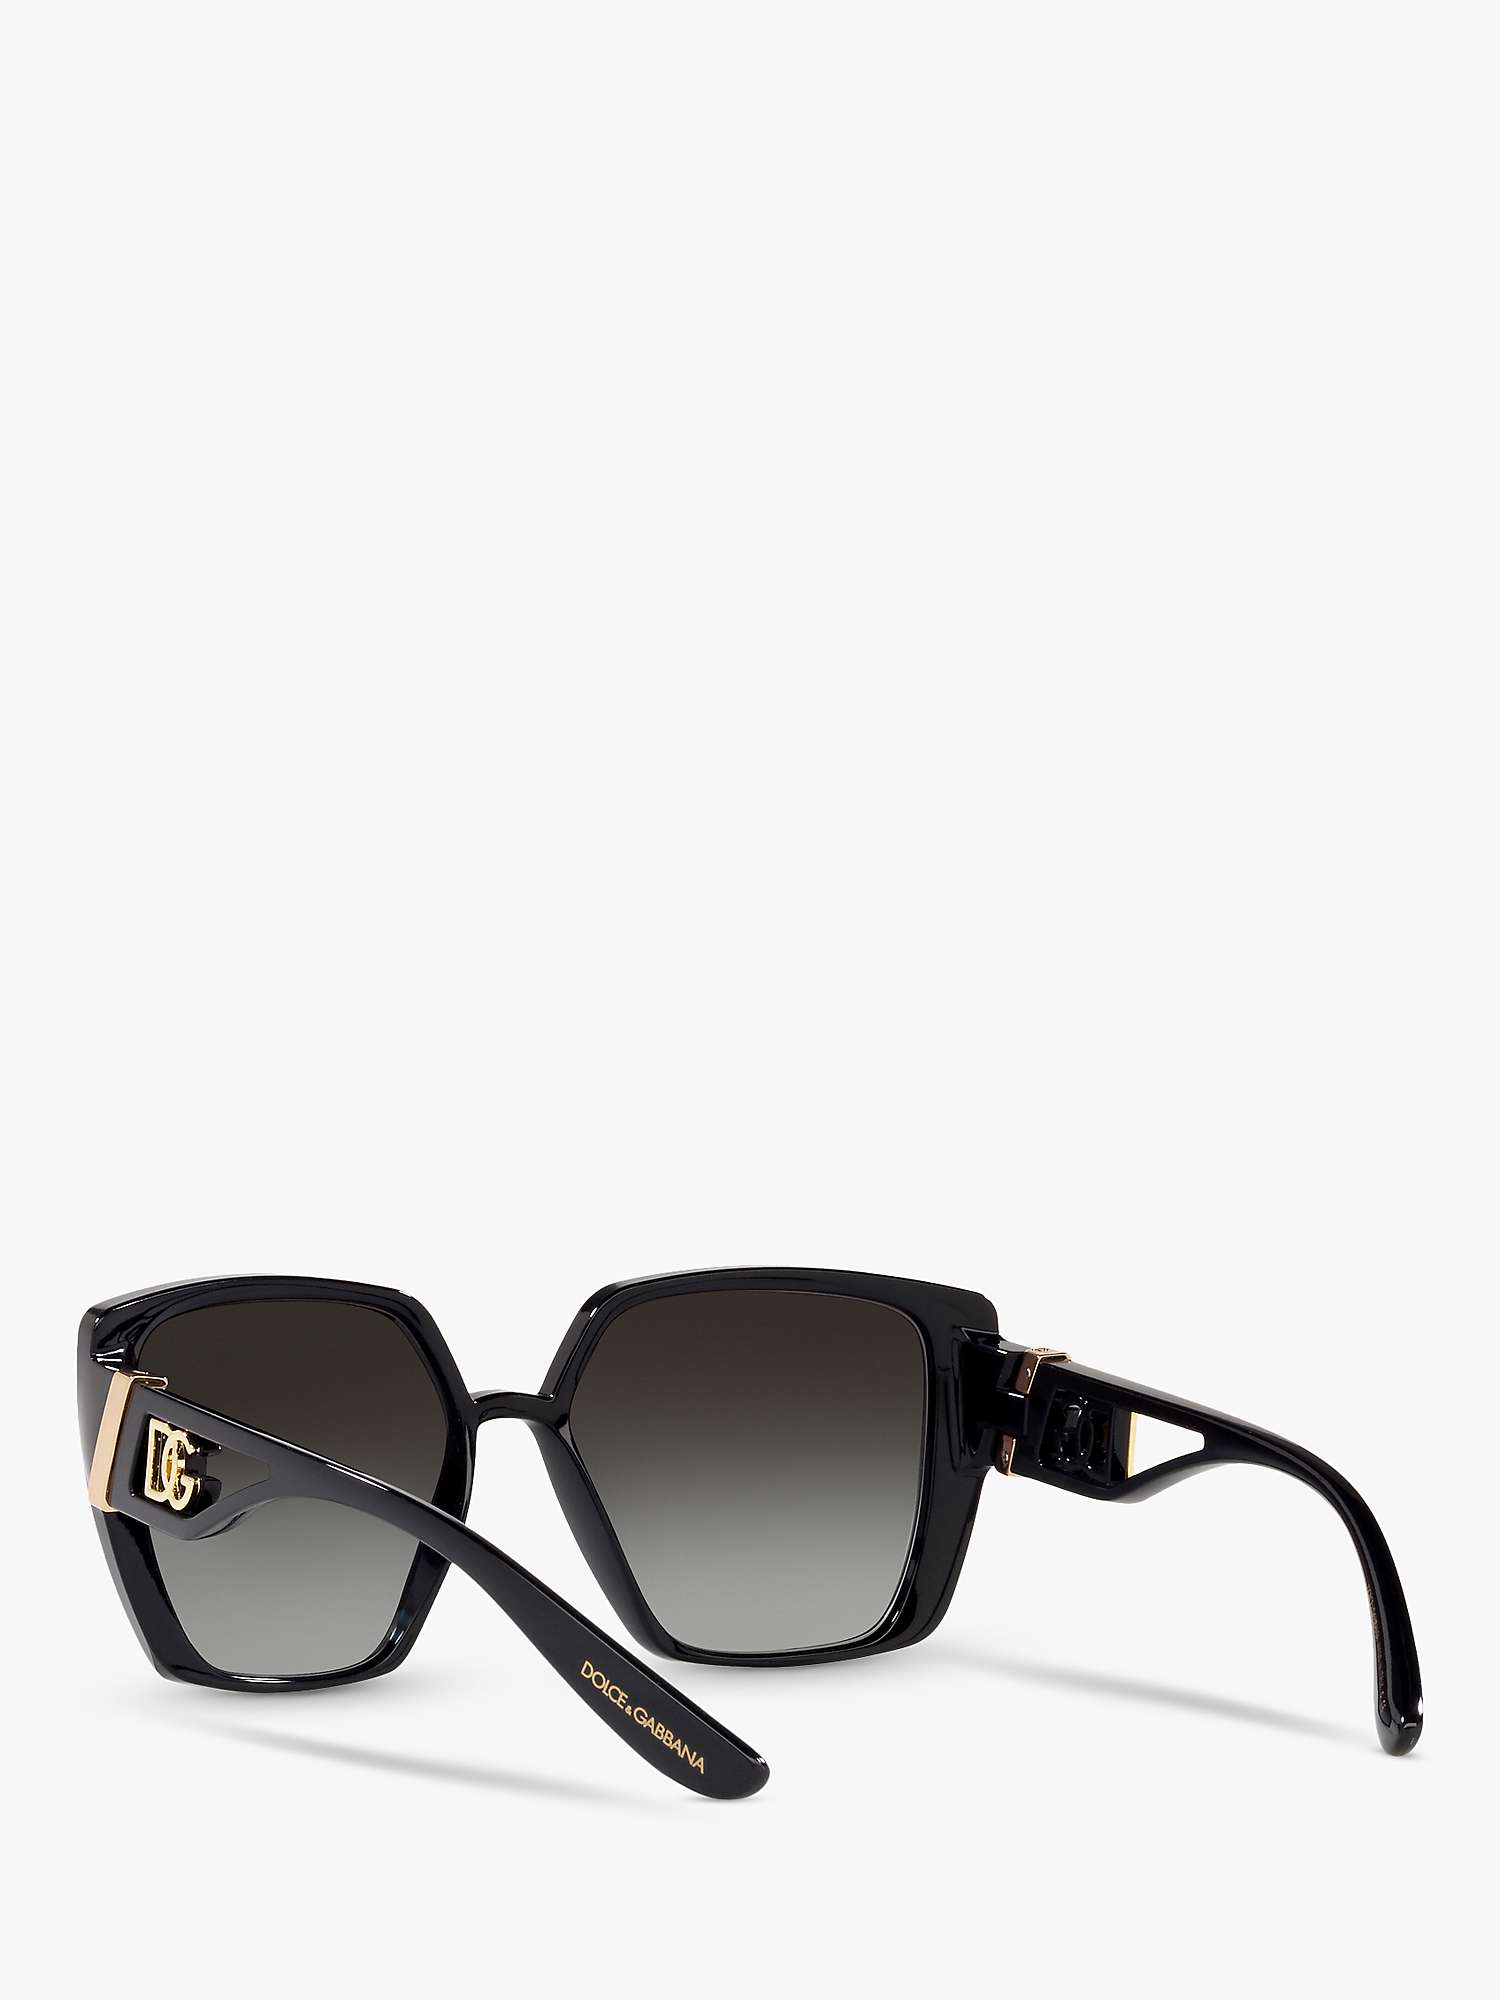 Buy Dolce & Gabbana DG6156 Women's Butterfly Sunglasses Online at johnlewis.com